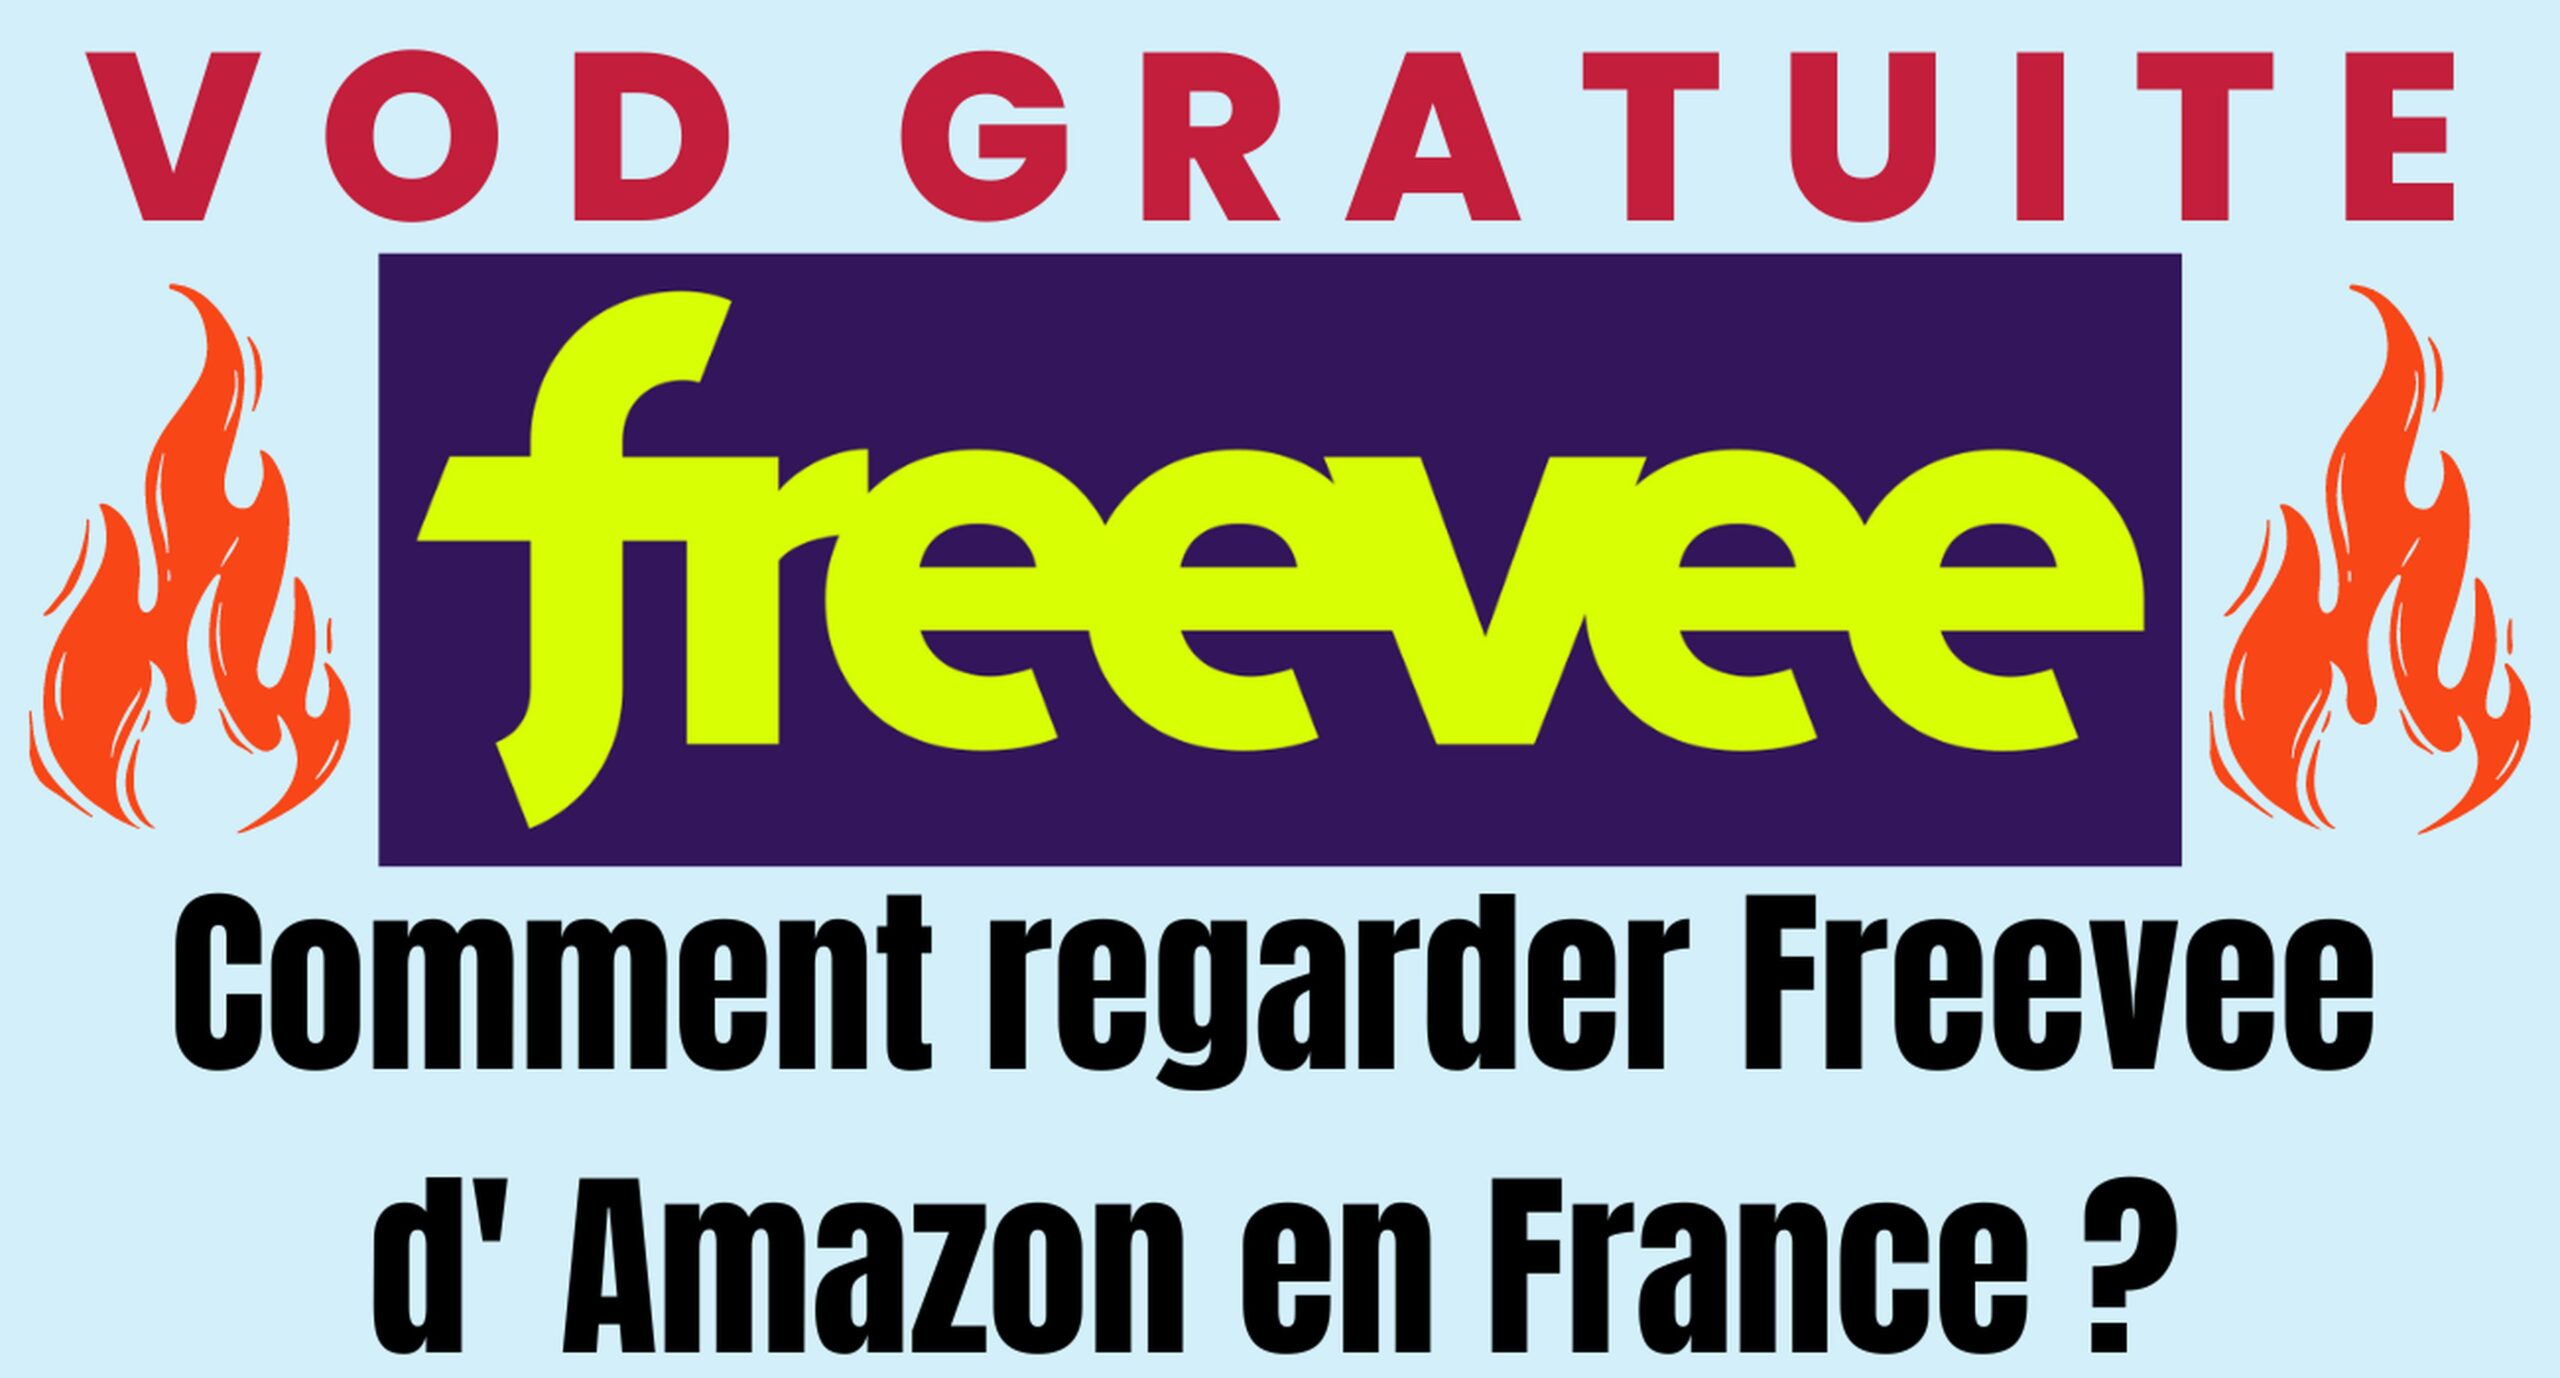 Freevee VOD - Service de streaming gratuit d’ Amazon 7